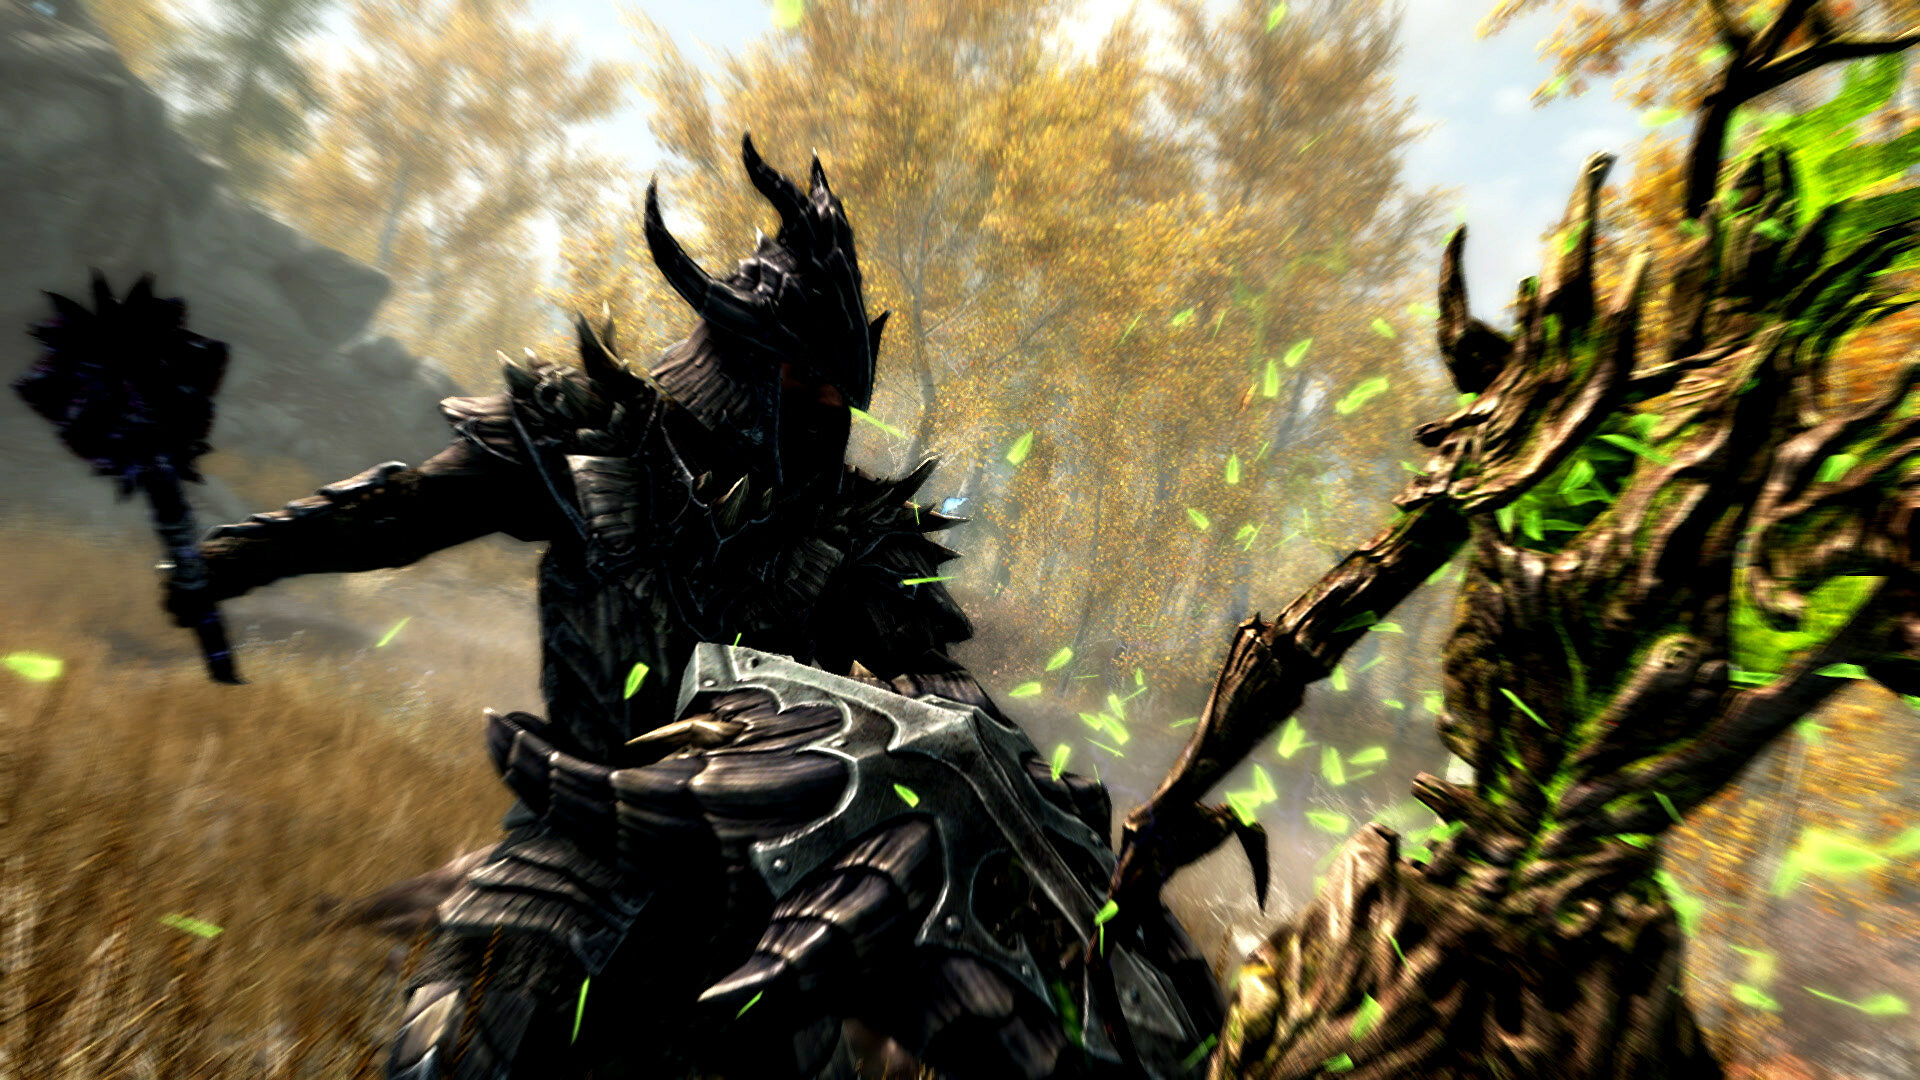 Skyrim mod gives your Dragonborn spider-sense for arrows